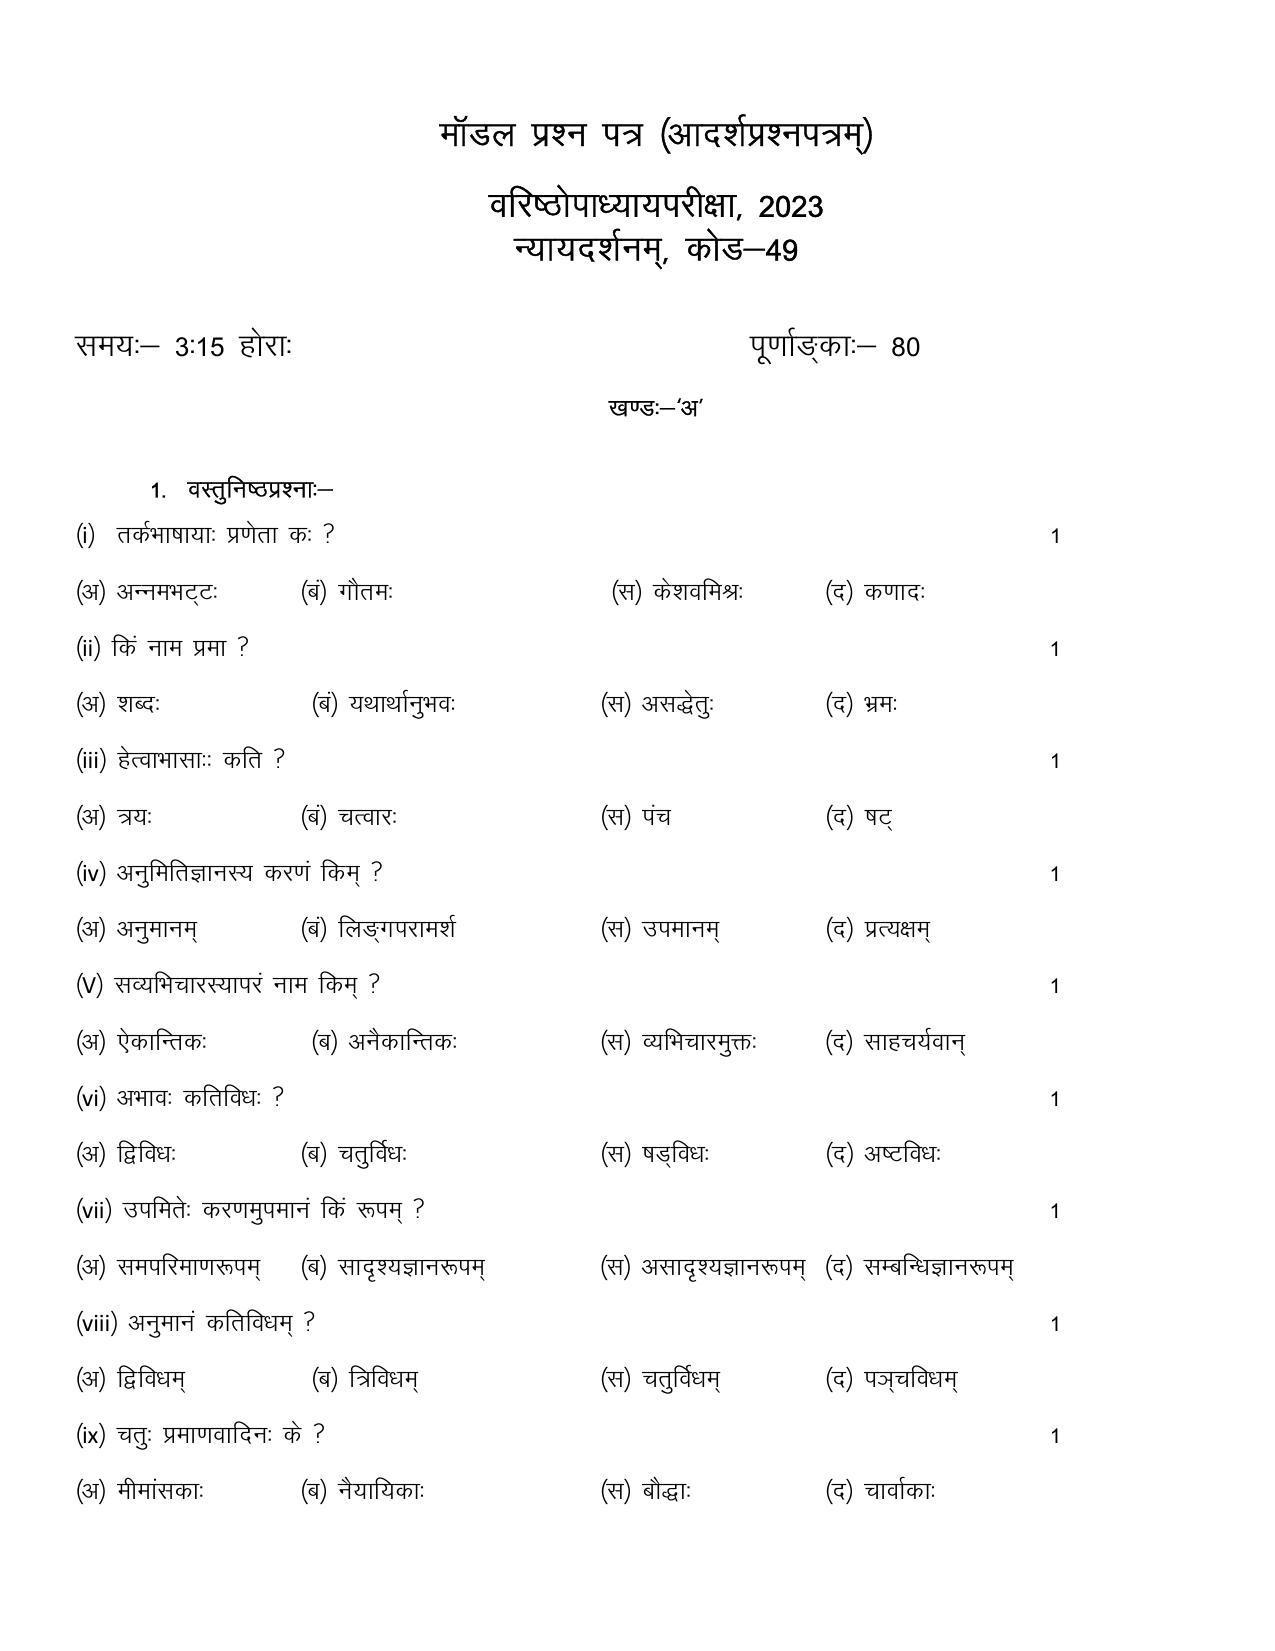 RBSE 2023 NYAYA DARSHANM Varishtha Upadhyay Paper - Page 6